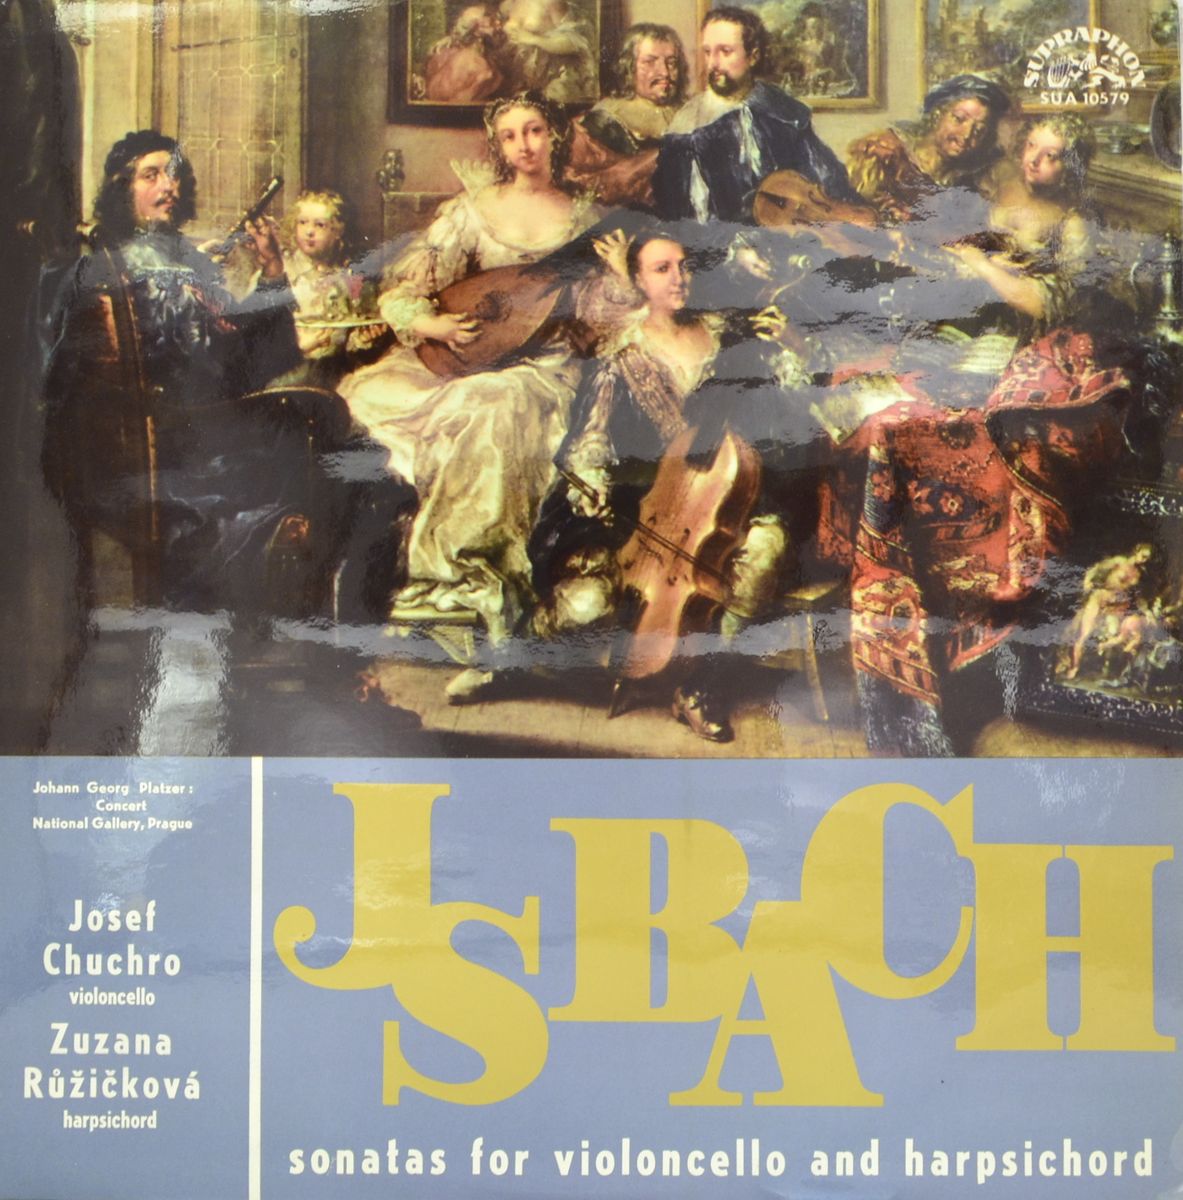 Johann Sebastian Bach, Josef Chuchro, Zuzana Ruzickova – Sonatas For Violoncello And Harpsichord (LP)